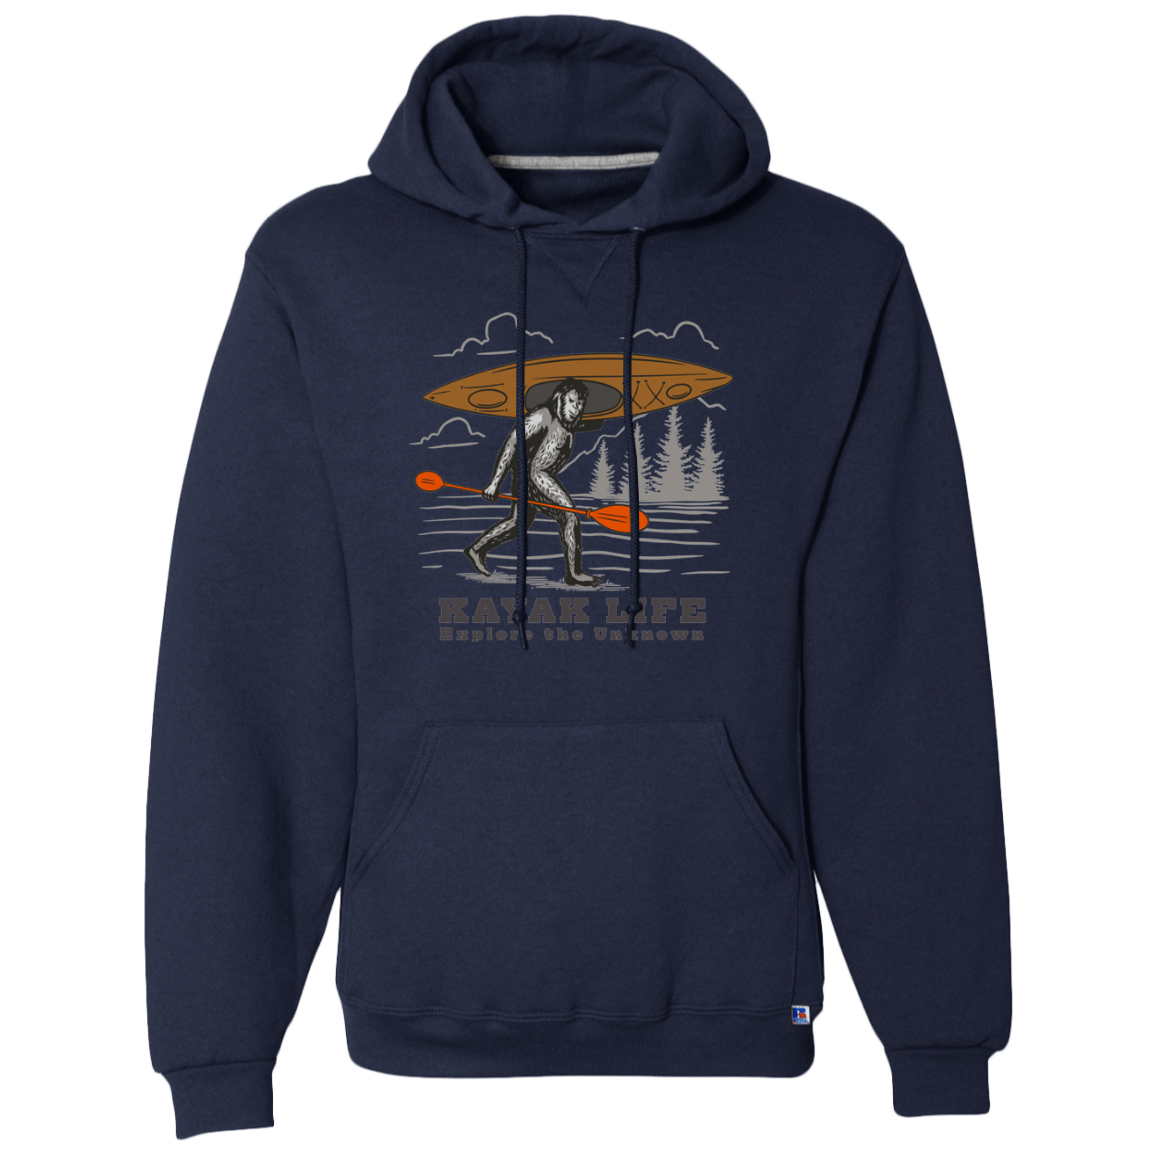 Kayak Life - Sasquatch Dri-Power Fleece Pullover Hoodie - Gifternaut